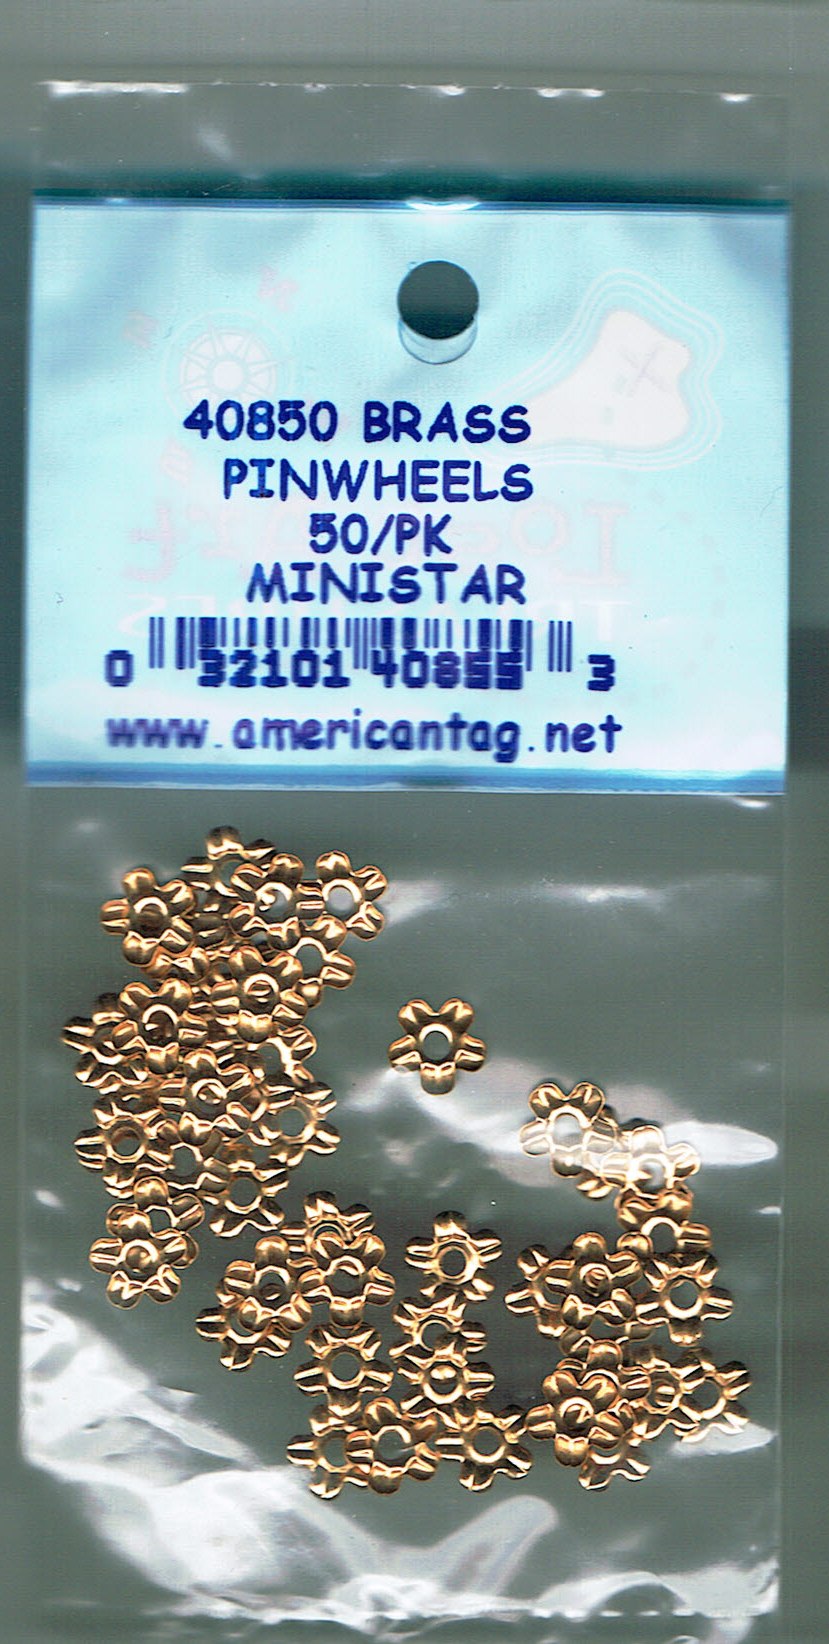 American Tag Nailheads - Brass Pinwheel Mini Stars (50/Pkg)